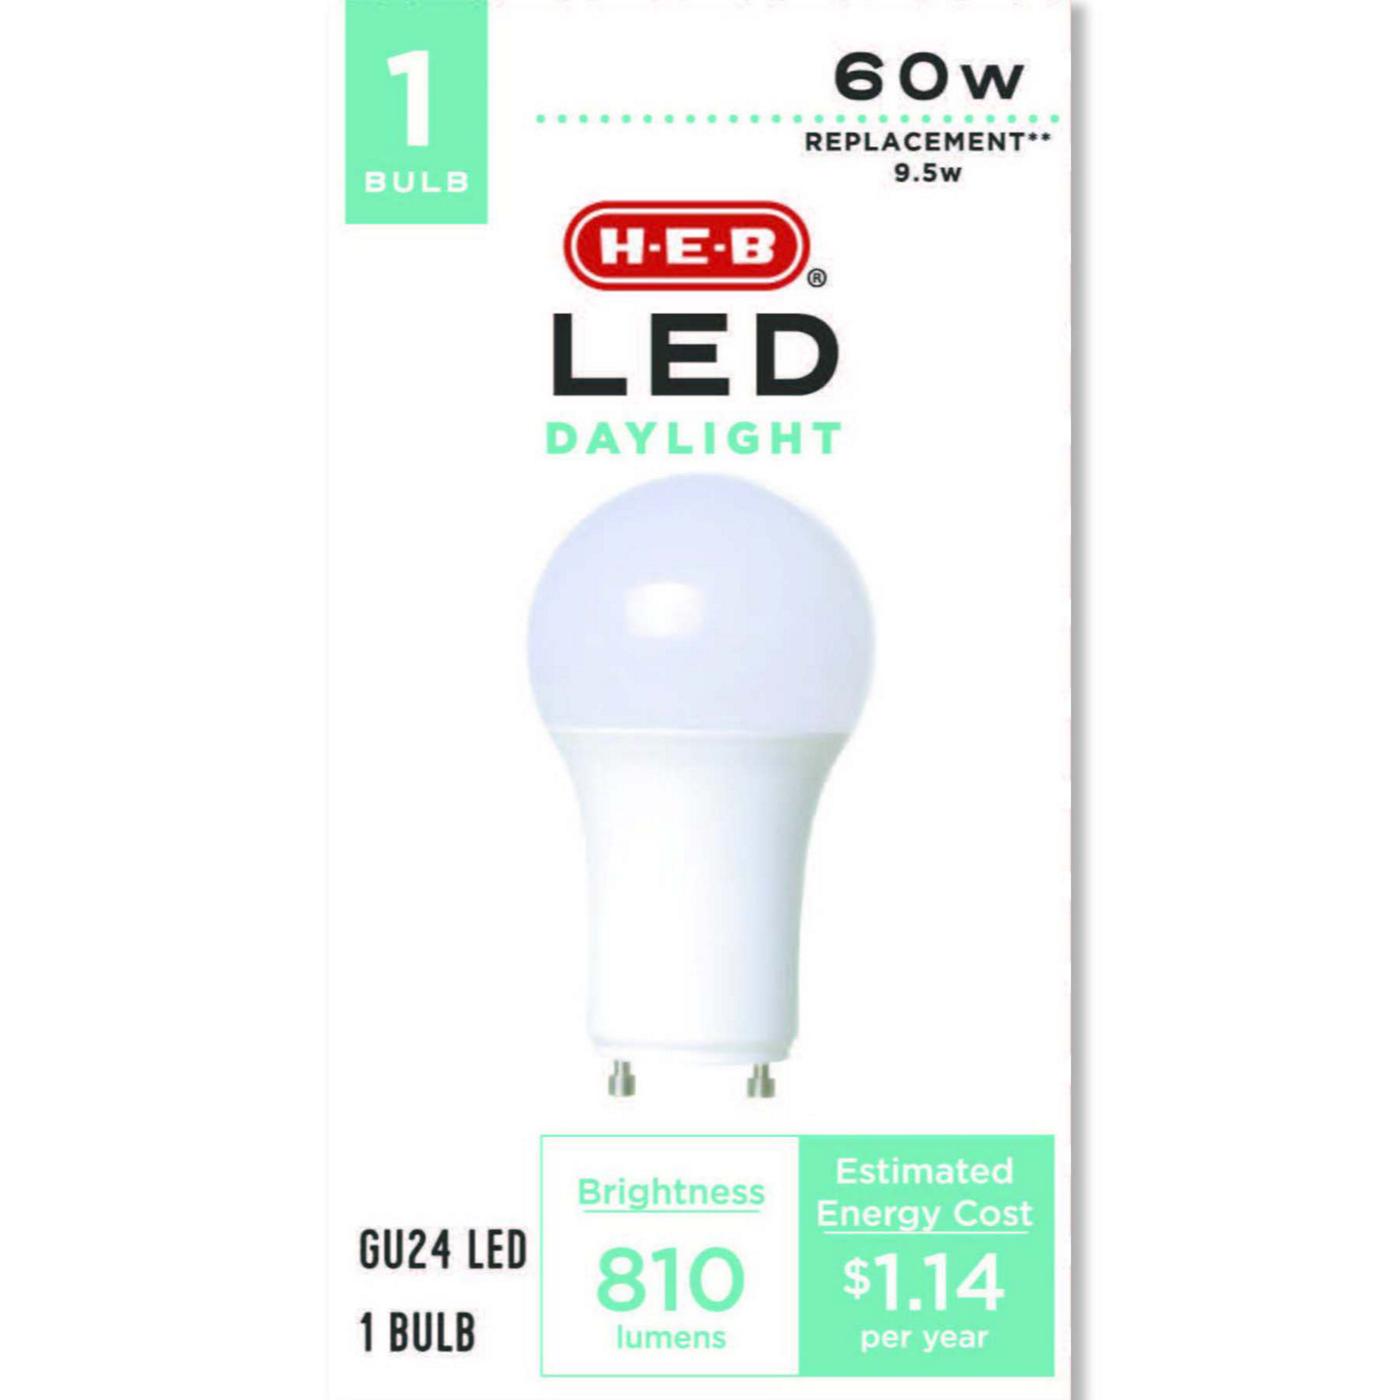 H-E-B GU24 60-Watt LED Light Bulbs - Daylight; image 1 of 2